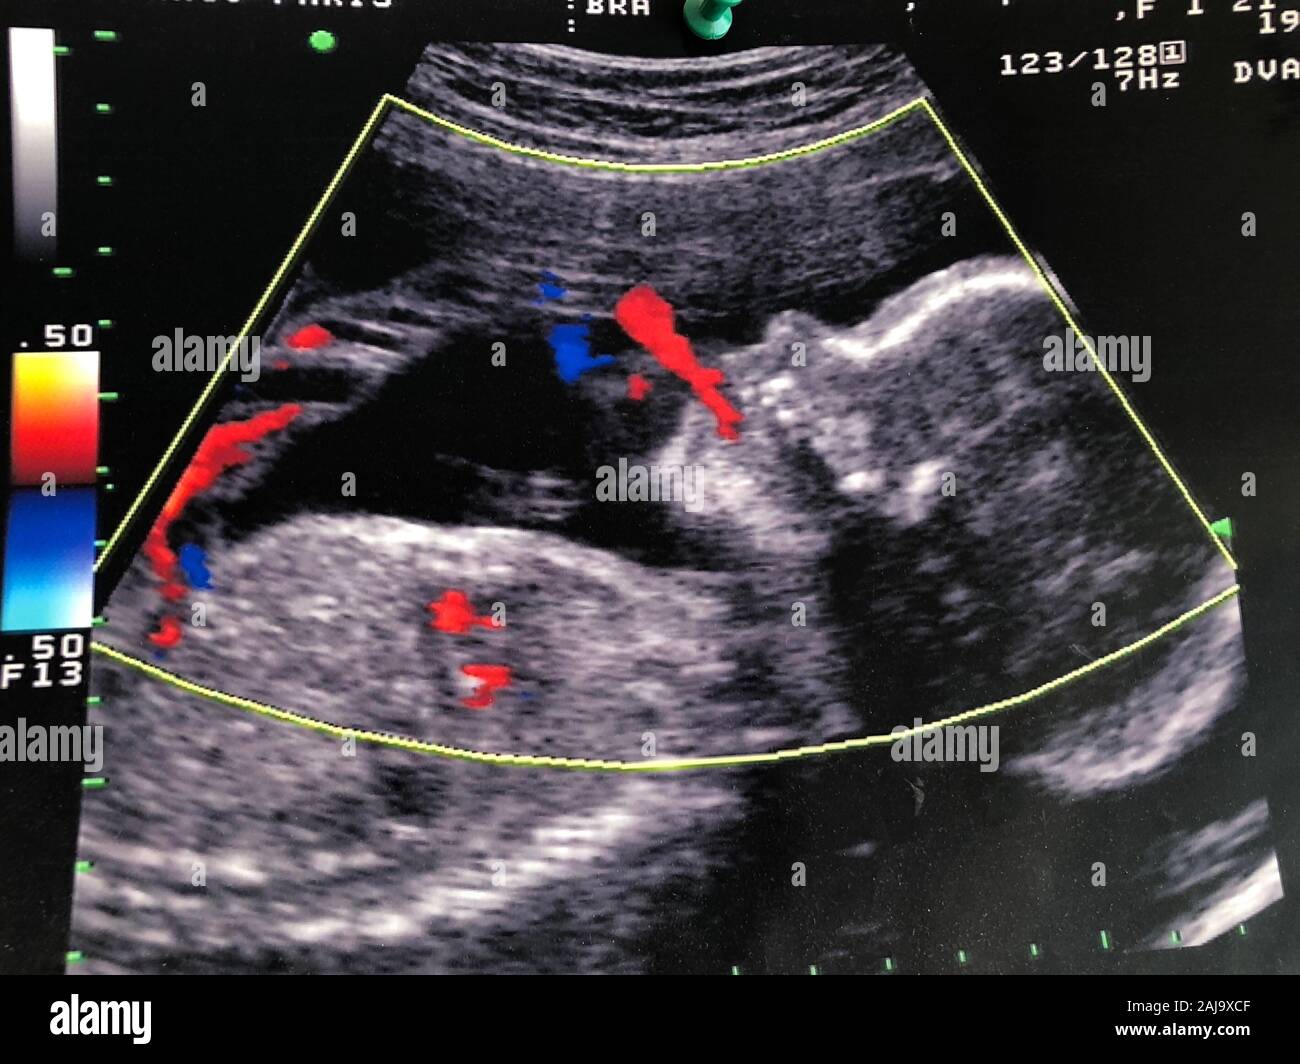 My Baby's Beat, un monitor fetal en tu iPhone